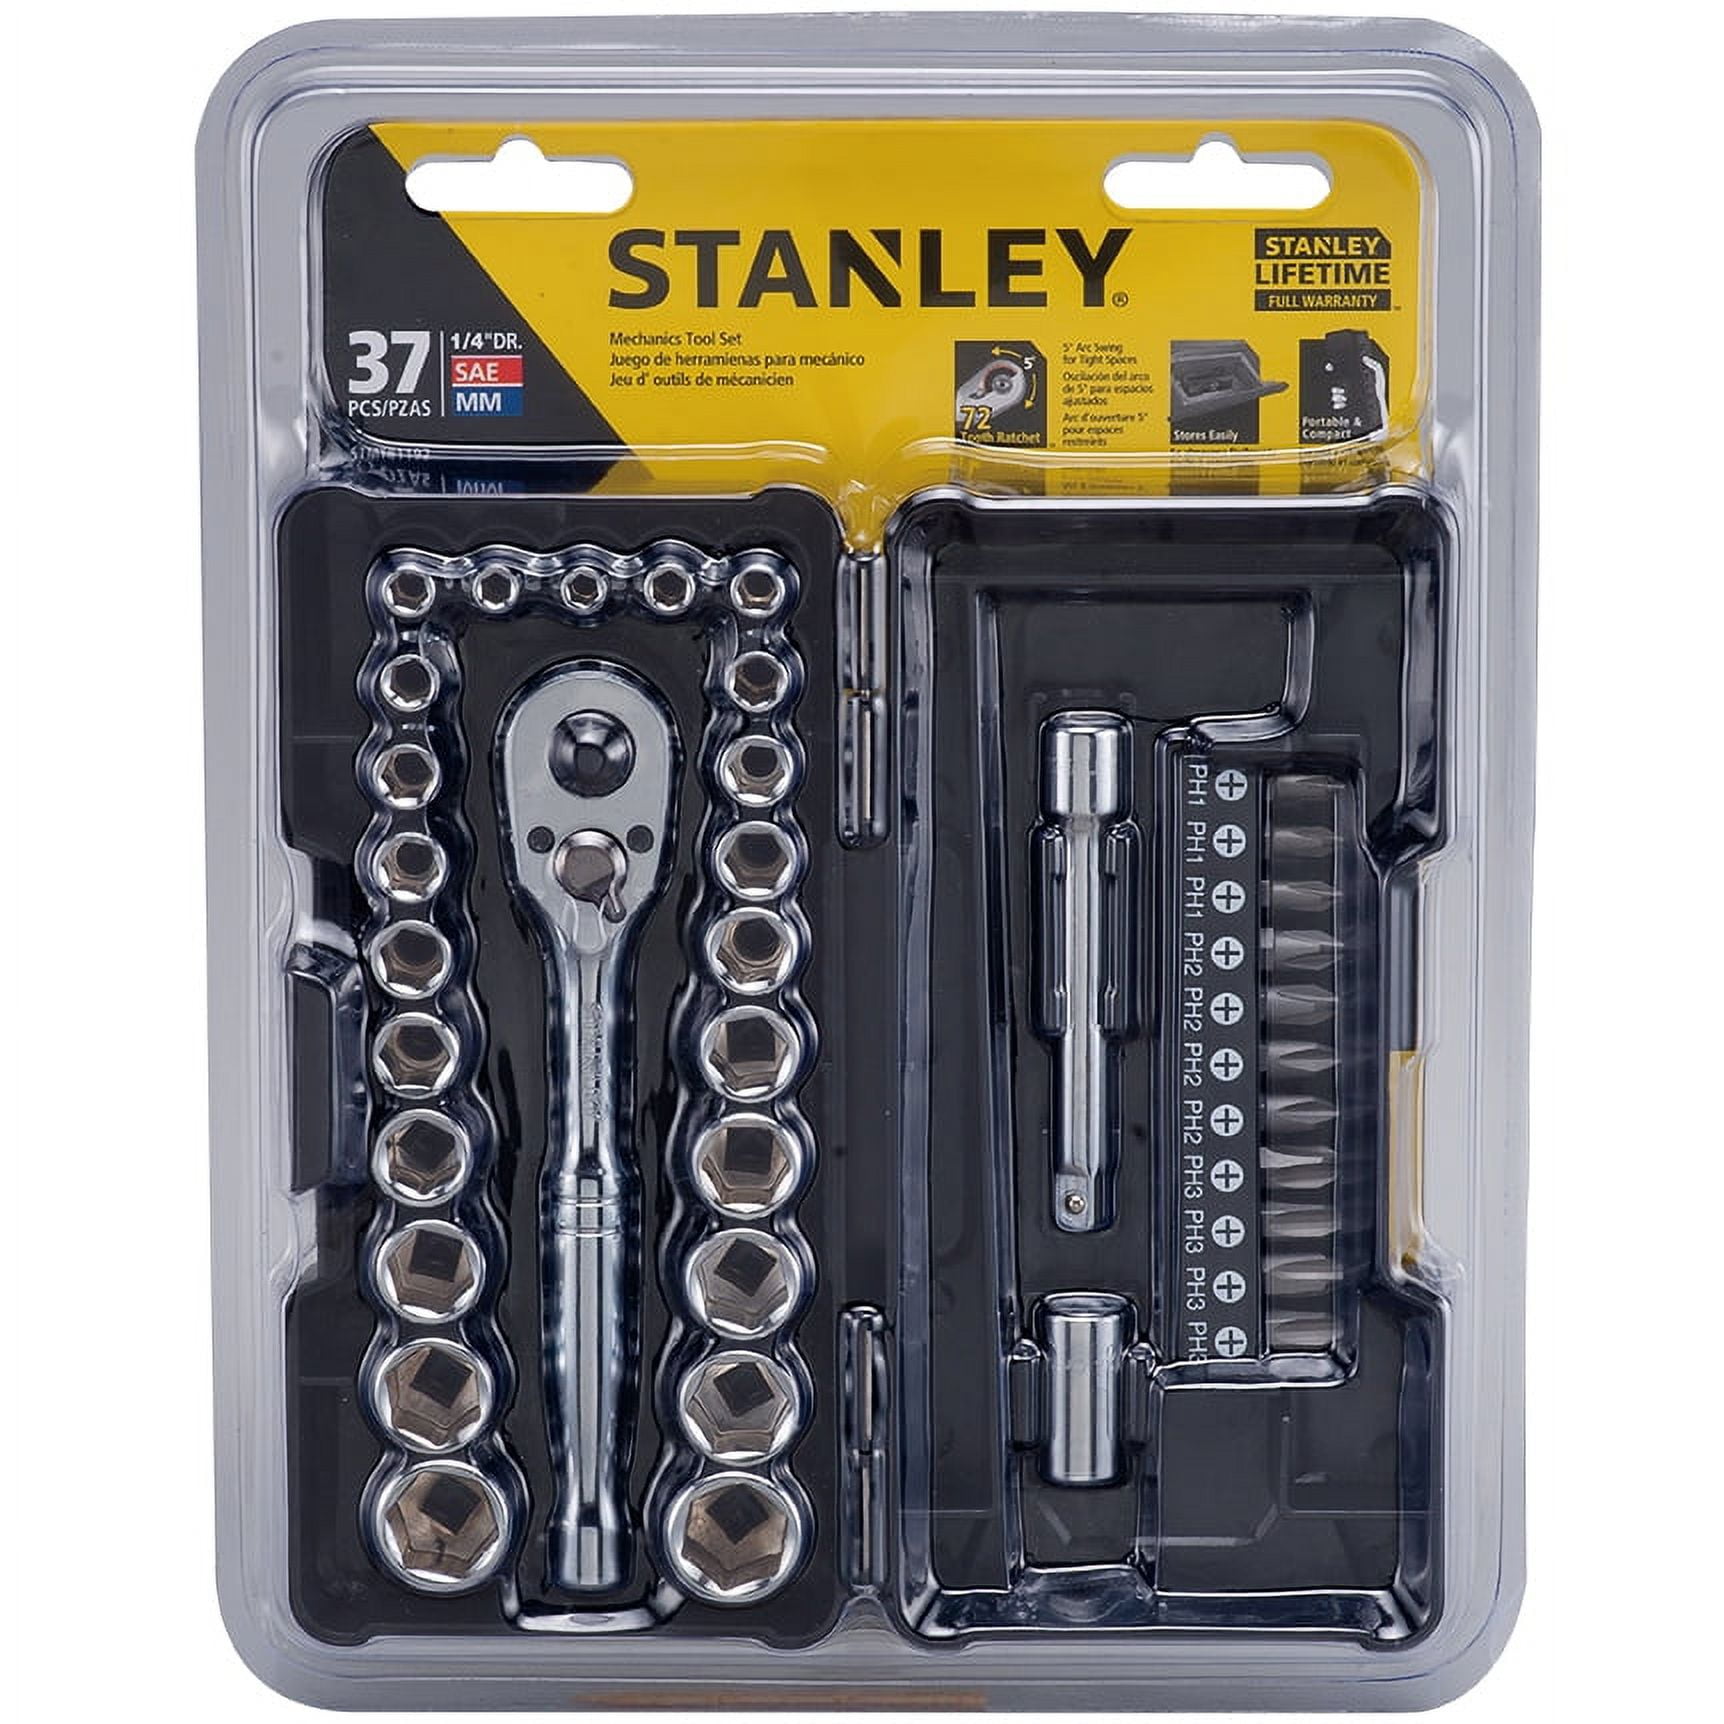 STANLEY Tool Set, Home/Mechanics, 65 Piece (94-248),Black